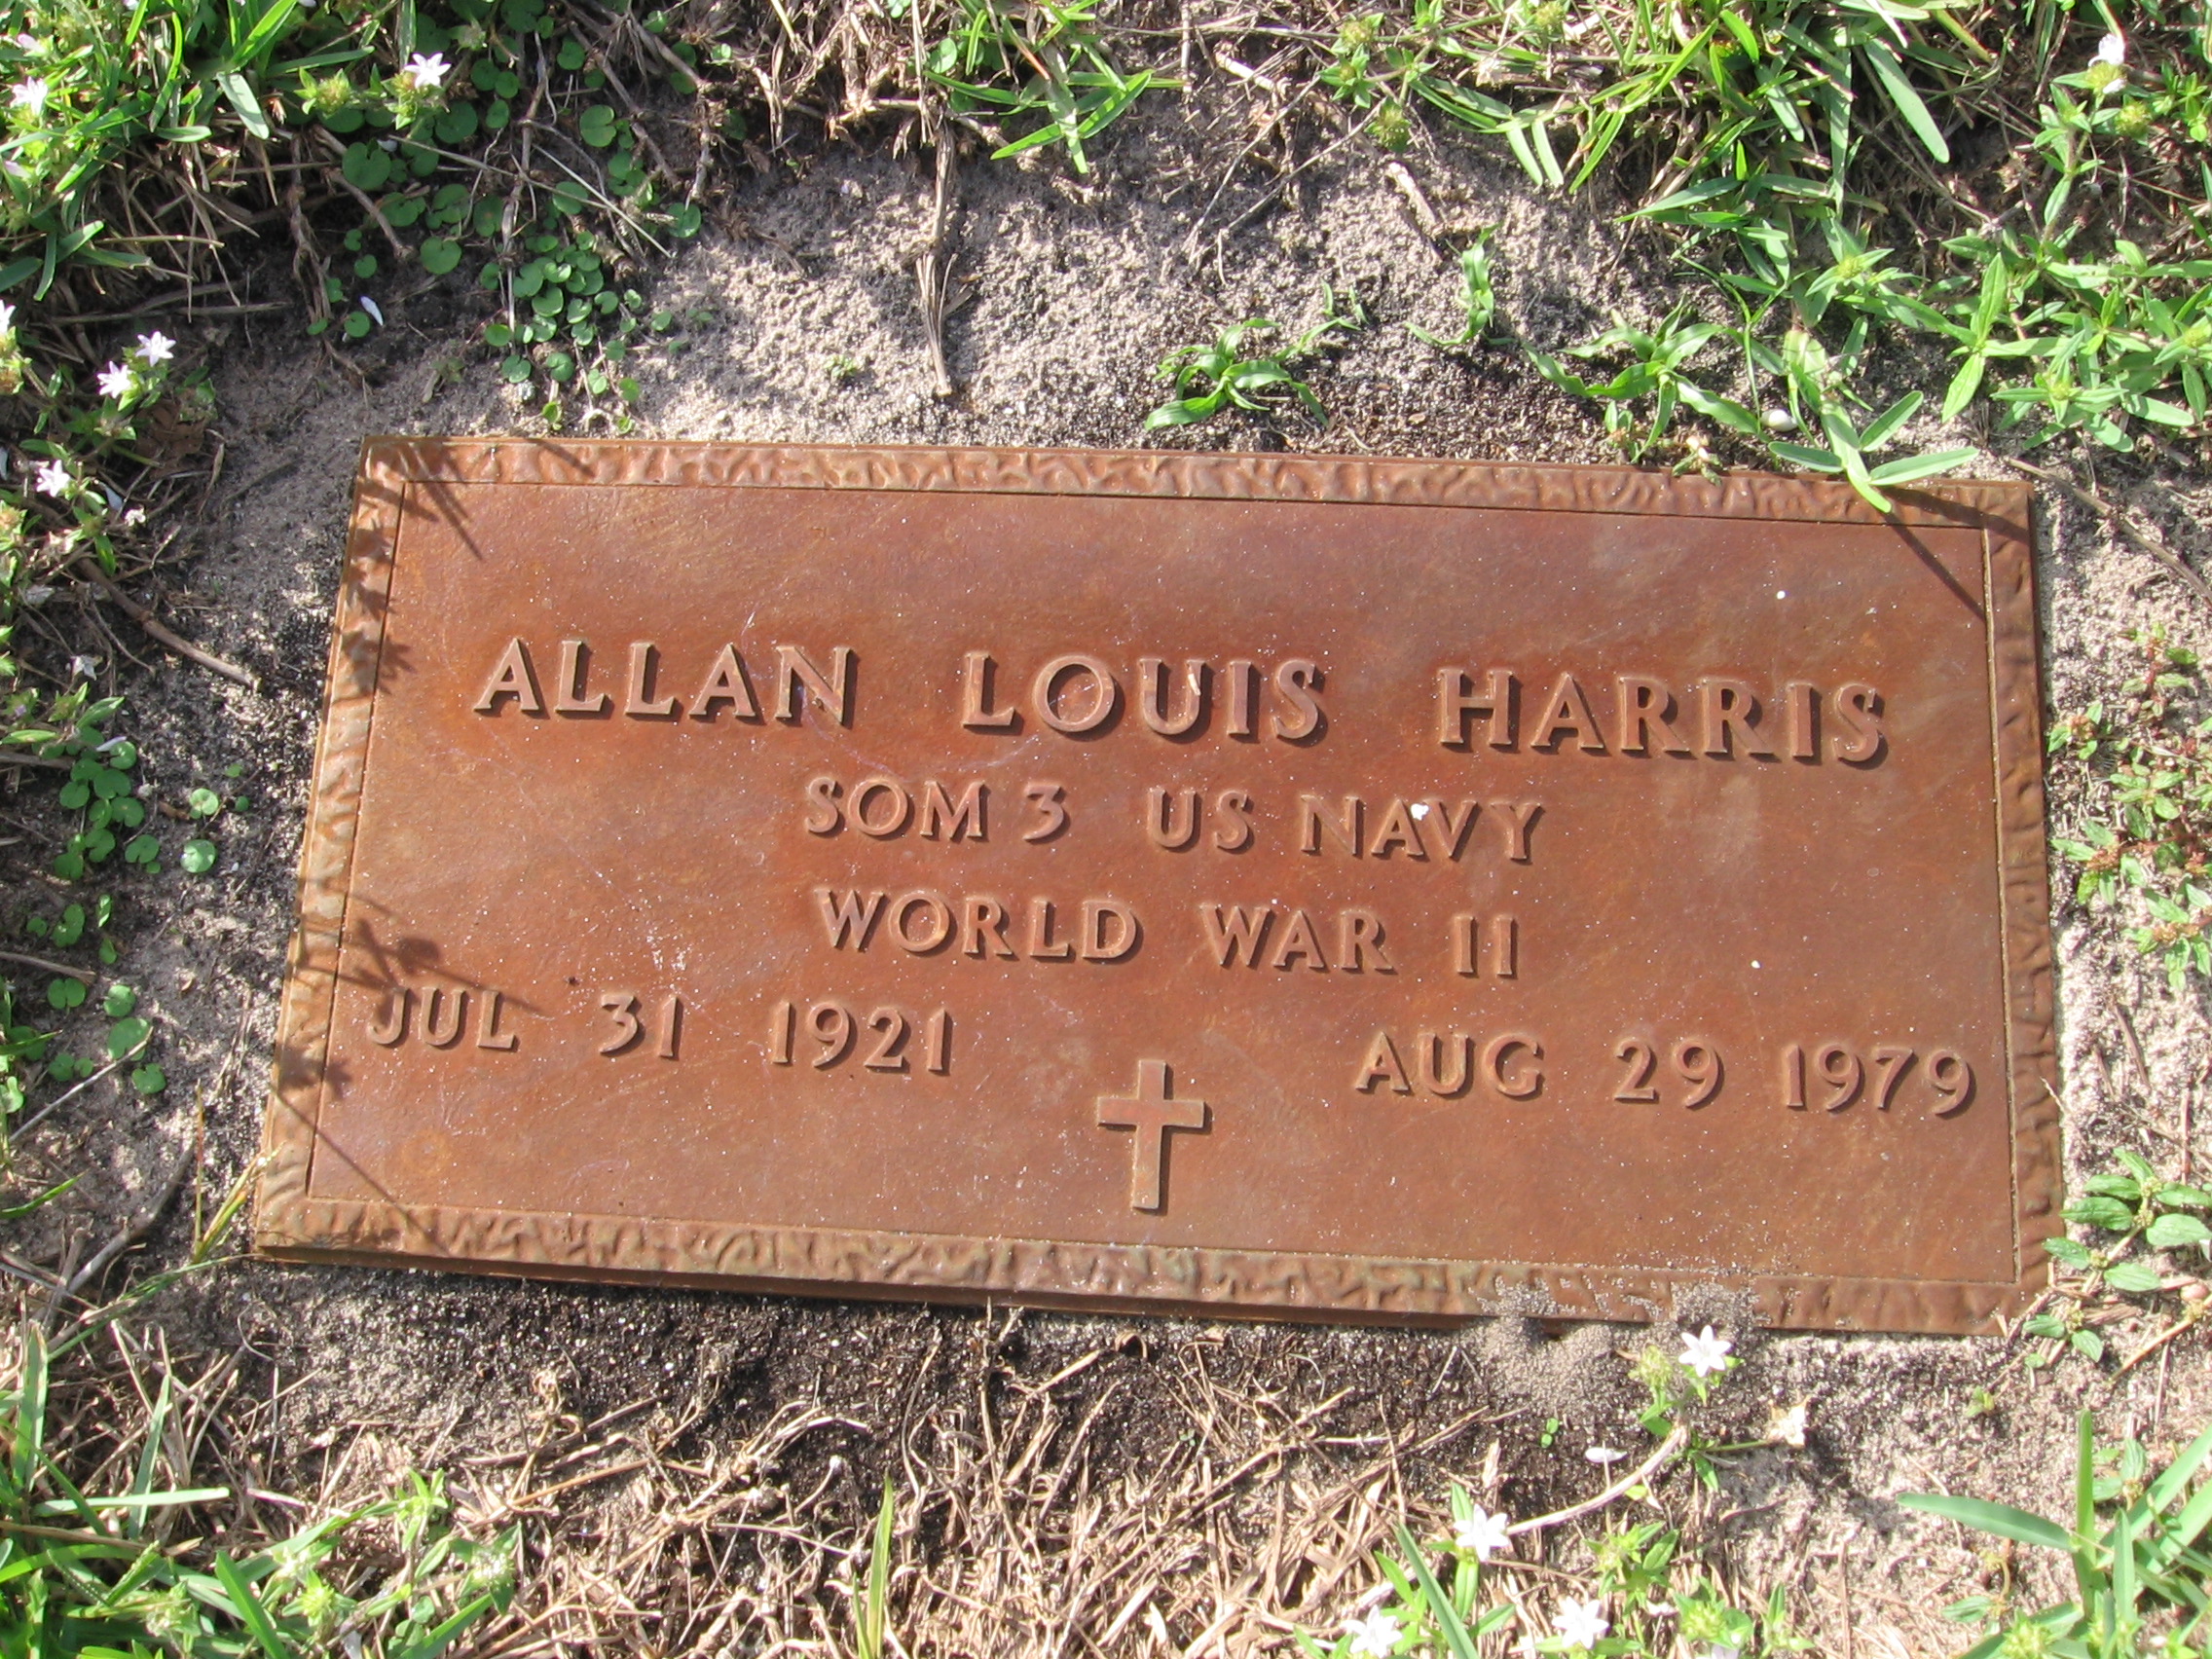 Allan Louis Harris